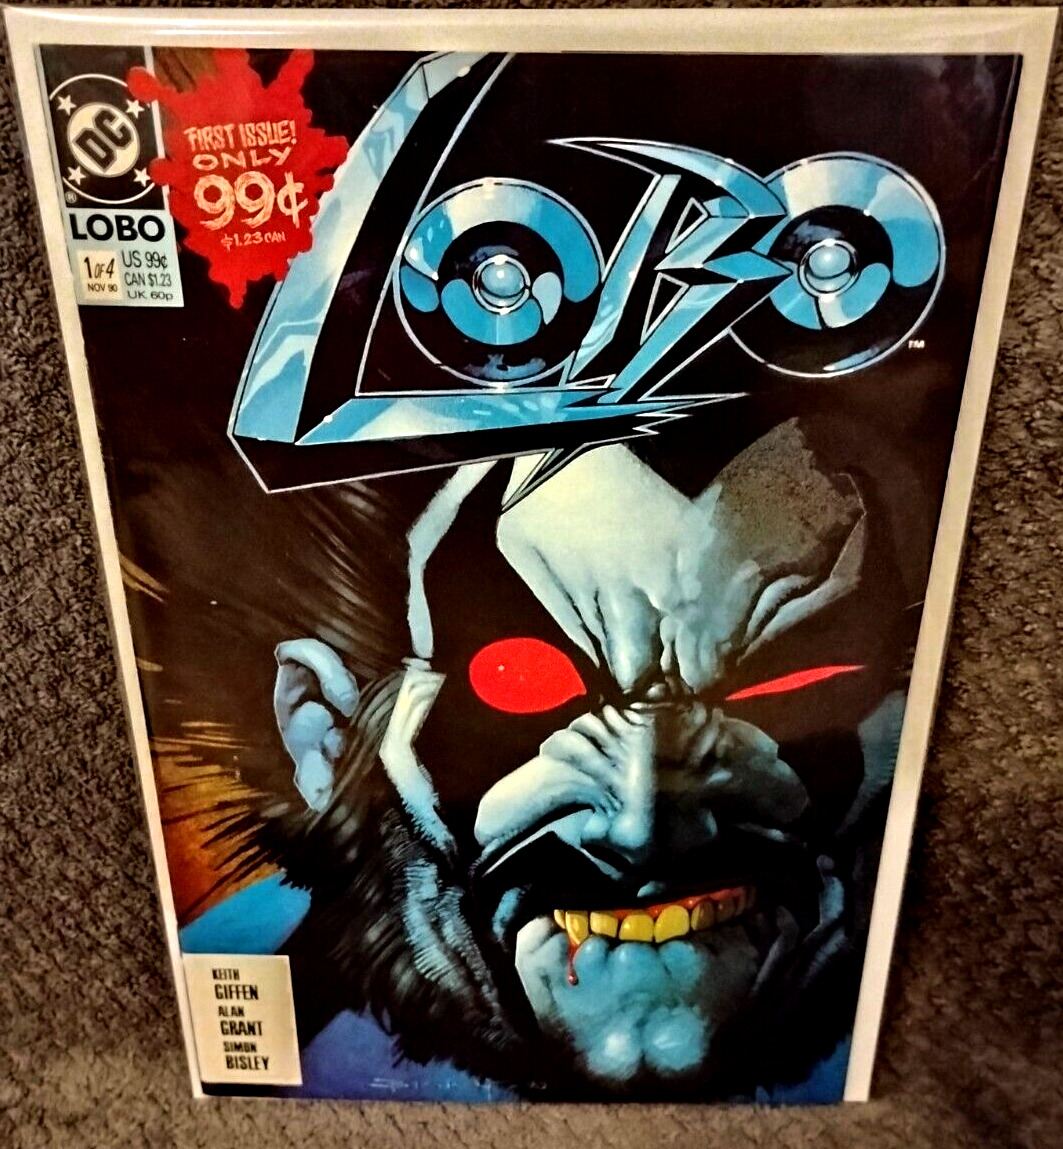 LOBO #1 NM 1990 DC Comics - Simon Bisley art/cover - Mini-series